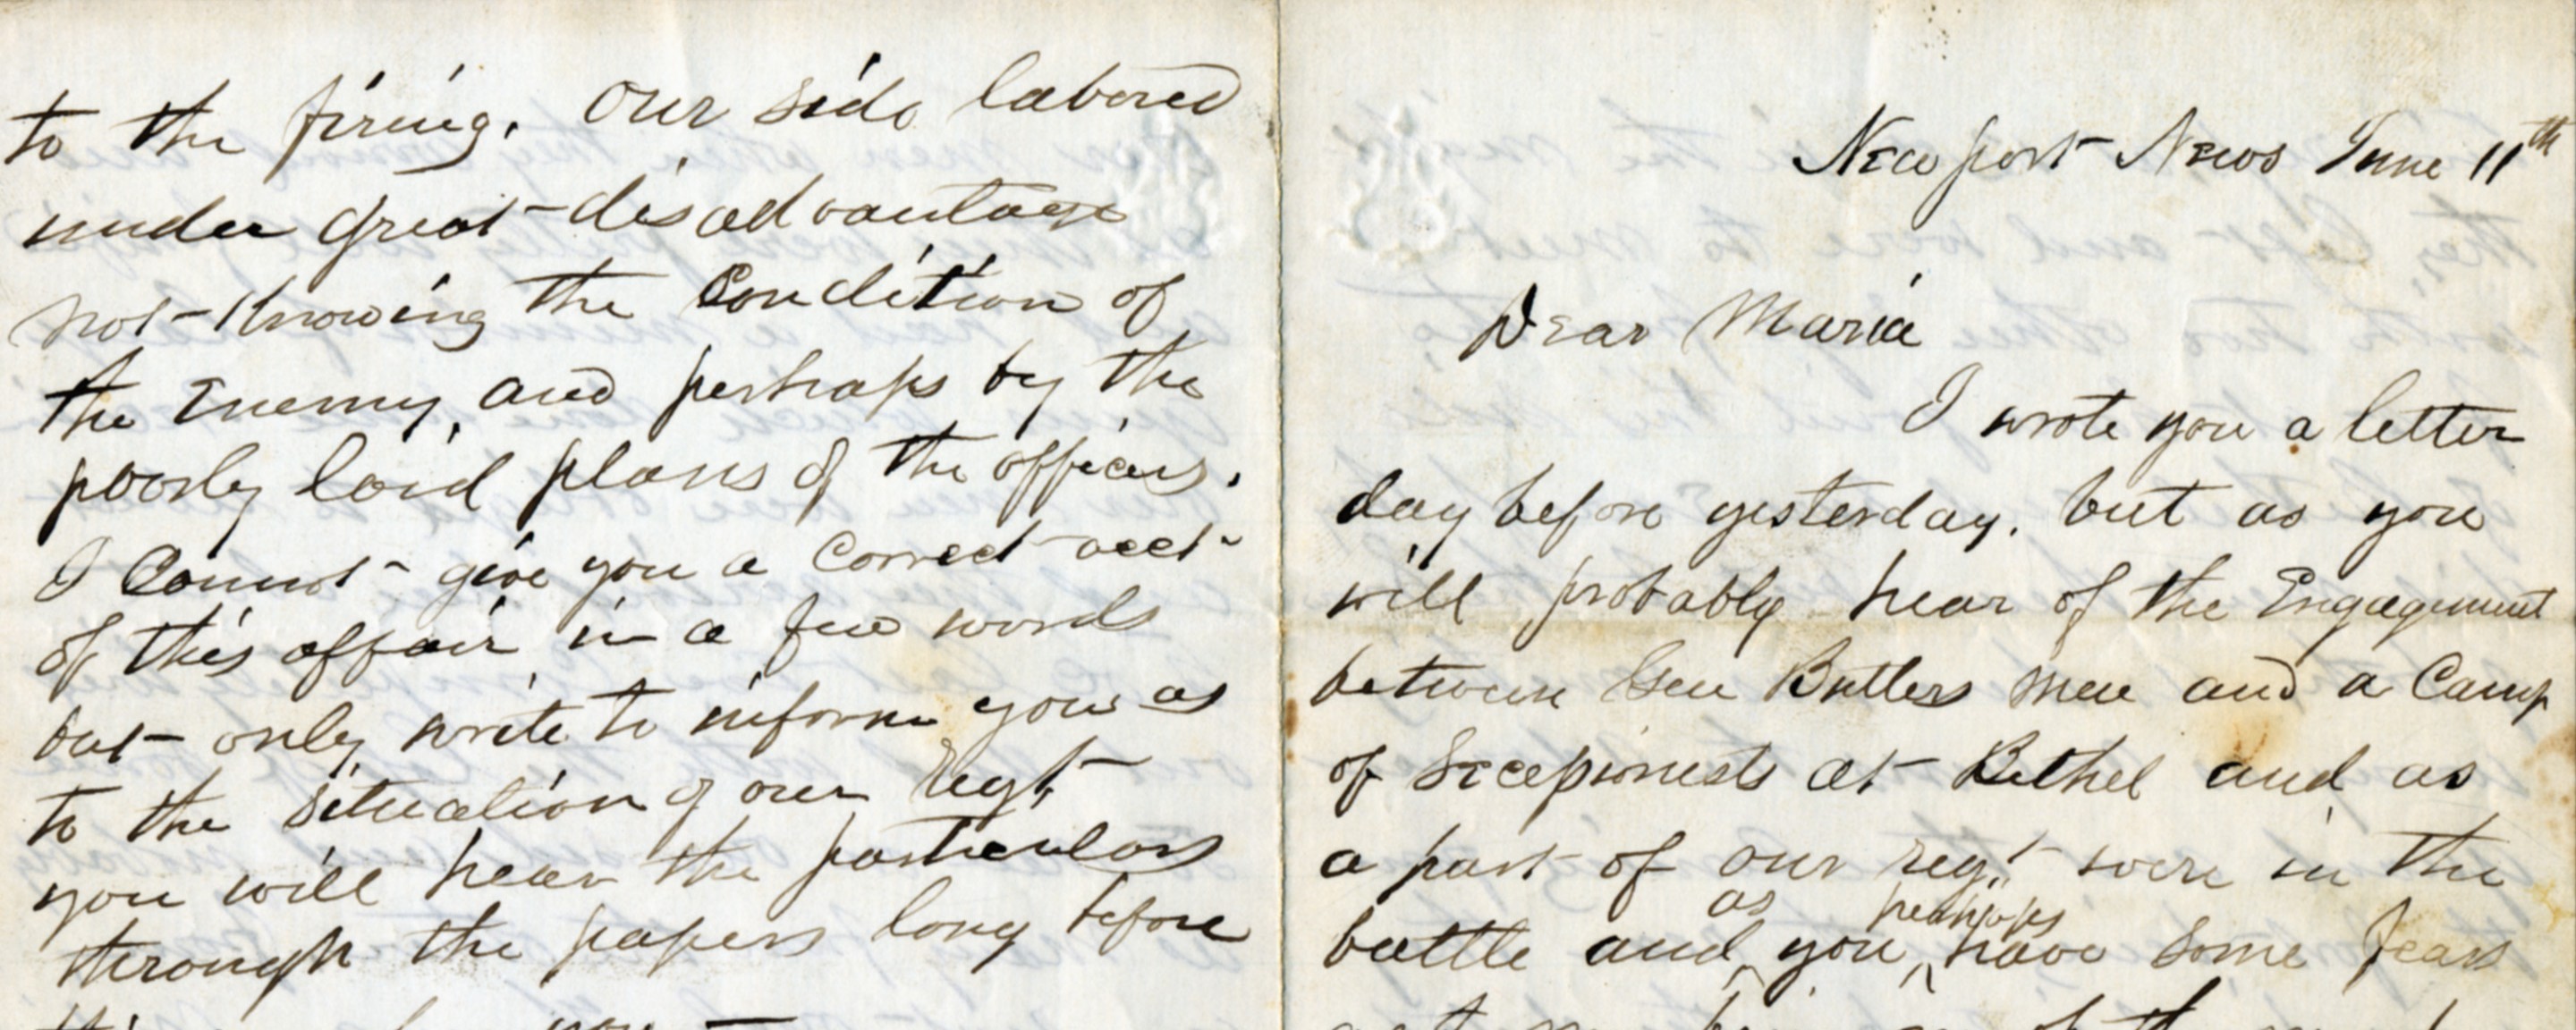 civil-war-manuscript-transcriptions-vermont-historical-society